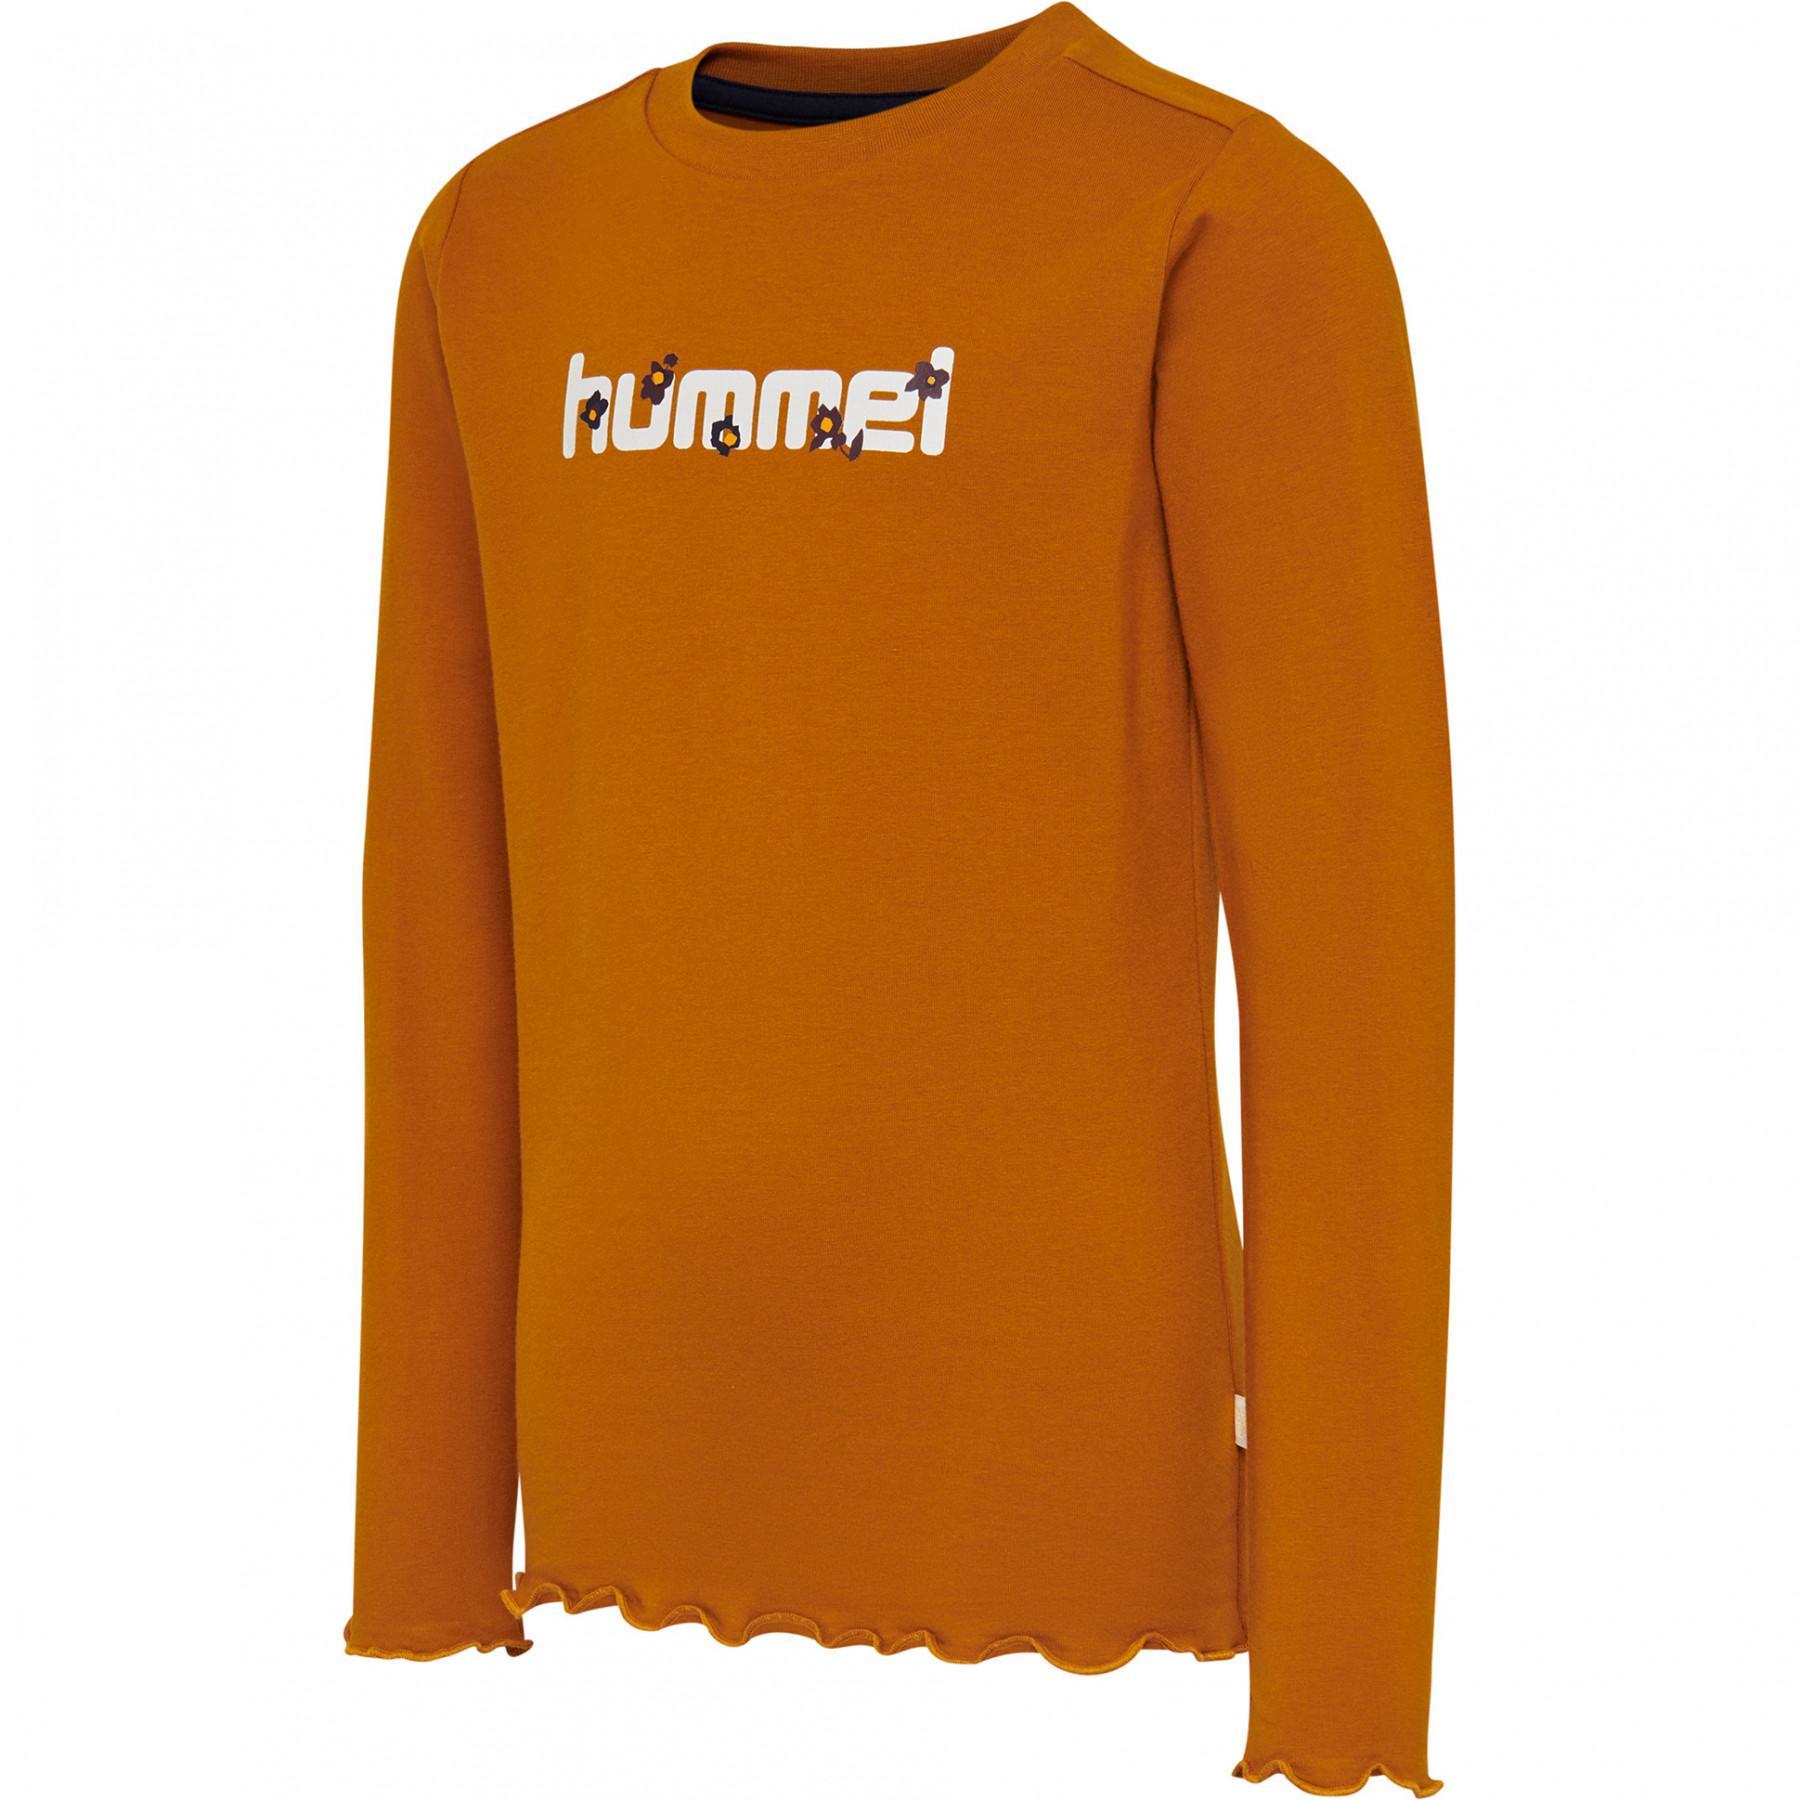 Camiseta manga larga niño Hummel hmlayaka